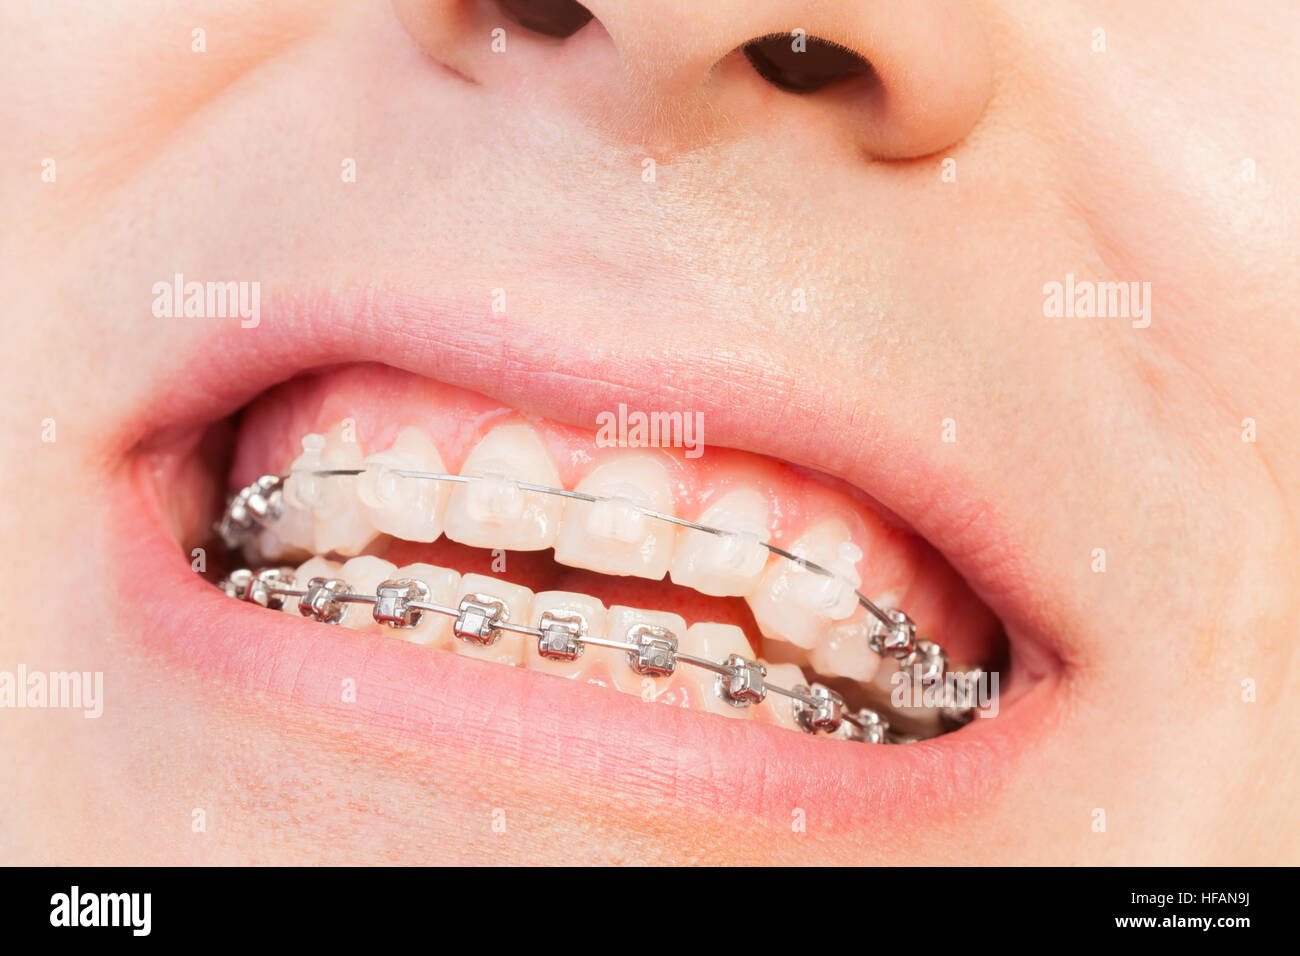 Uomo sorridente con bretelle ortodontico Foto Stock